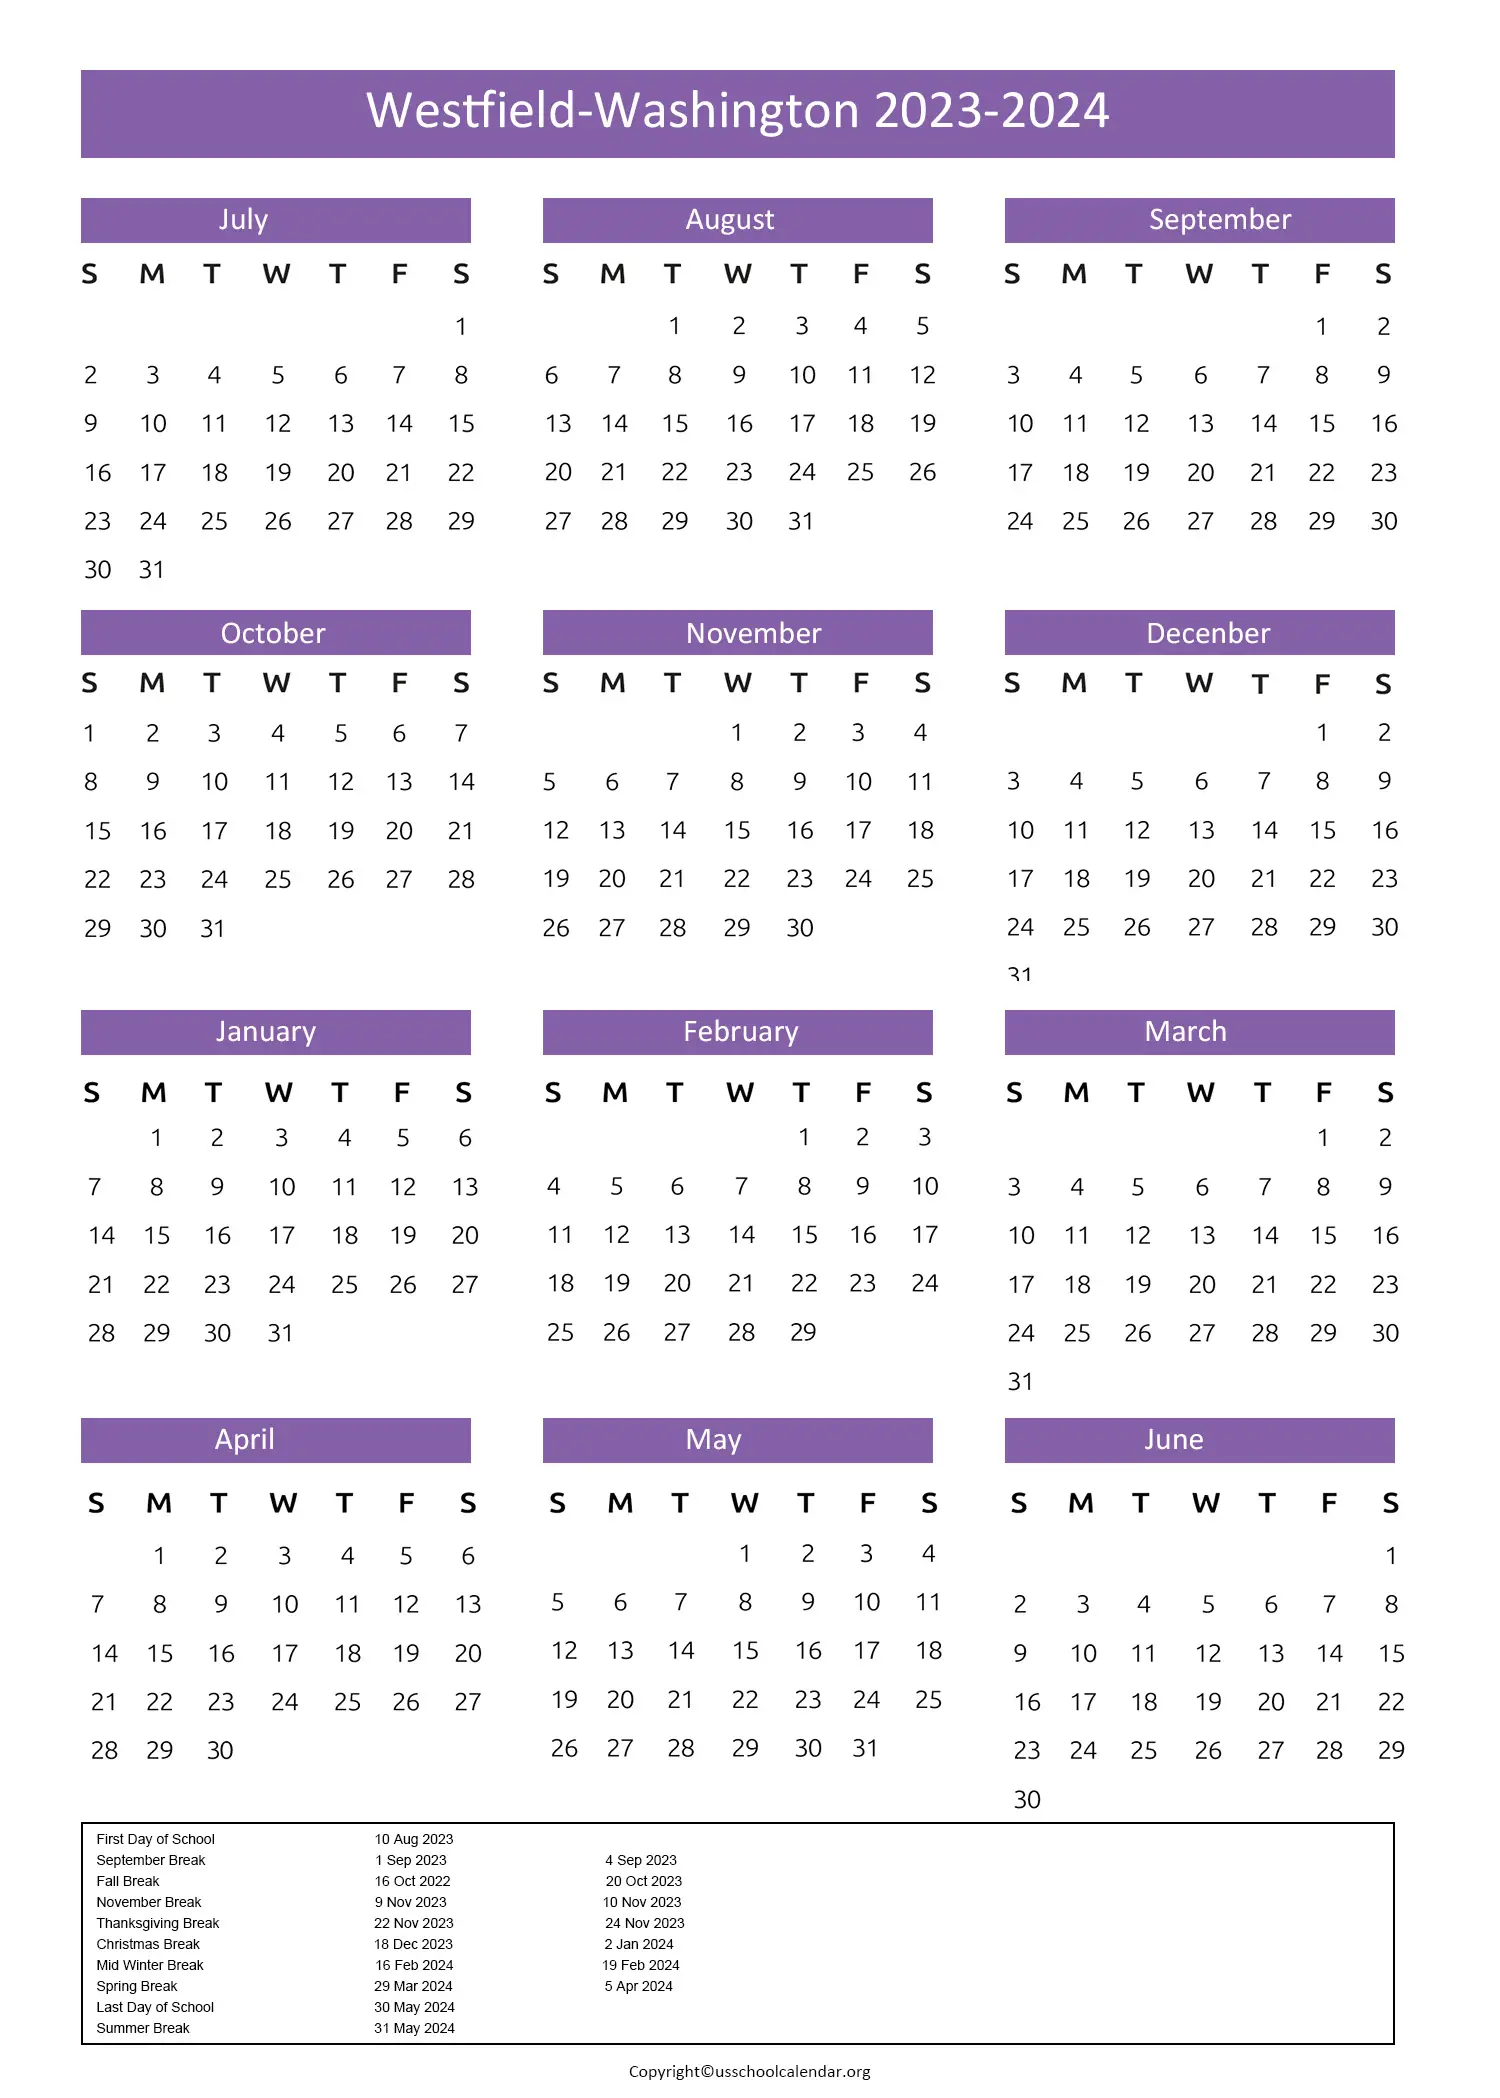 westfield-washington-schools-calendar-with-holidays-2023-2024